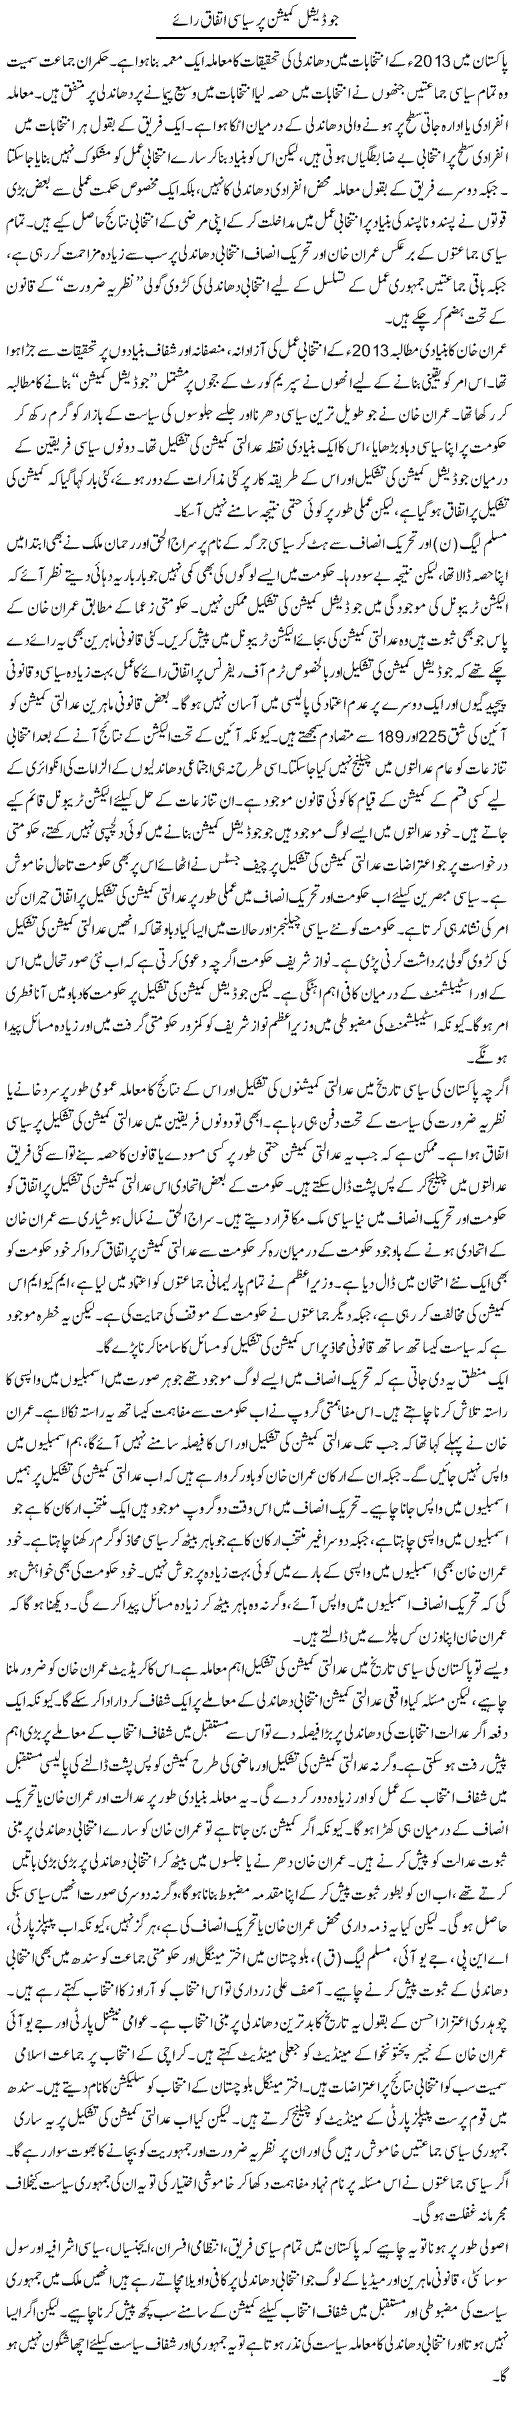 Judicial Commission Per Siasi Ittefaq Raye | Salman Abid | Daily Urdu Columns